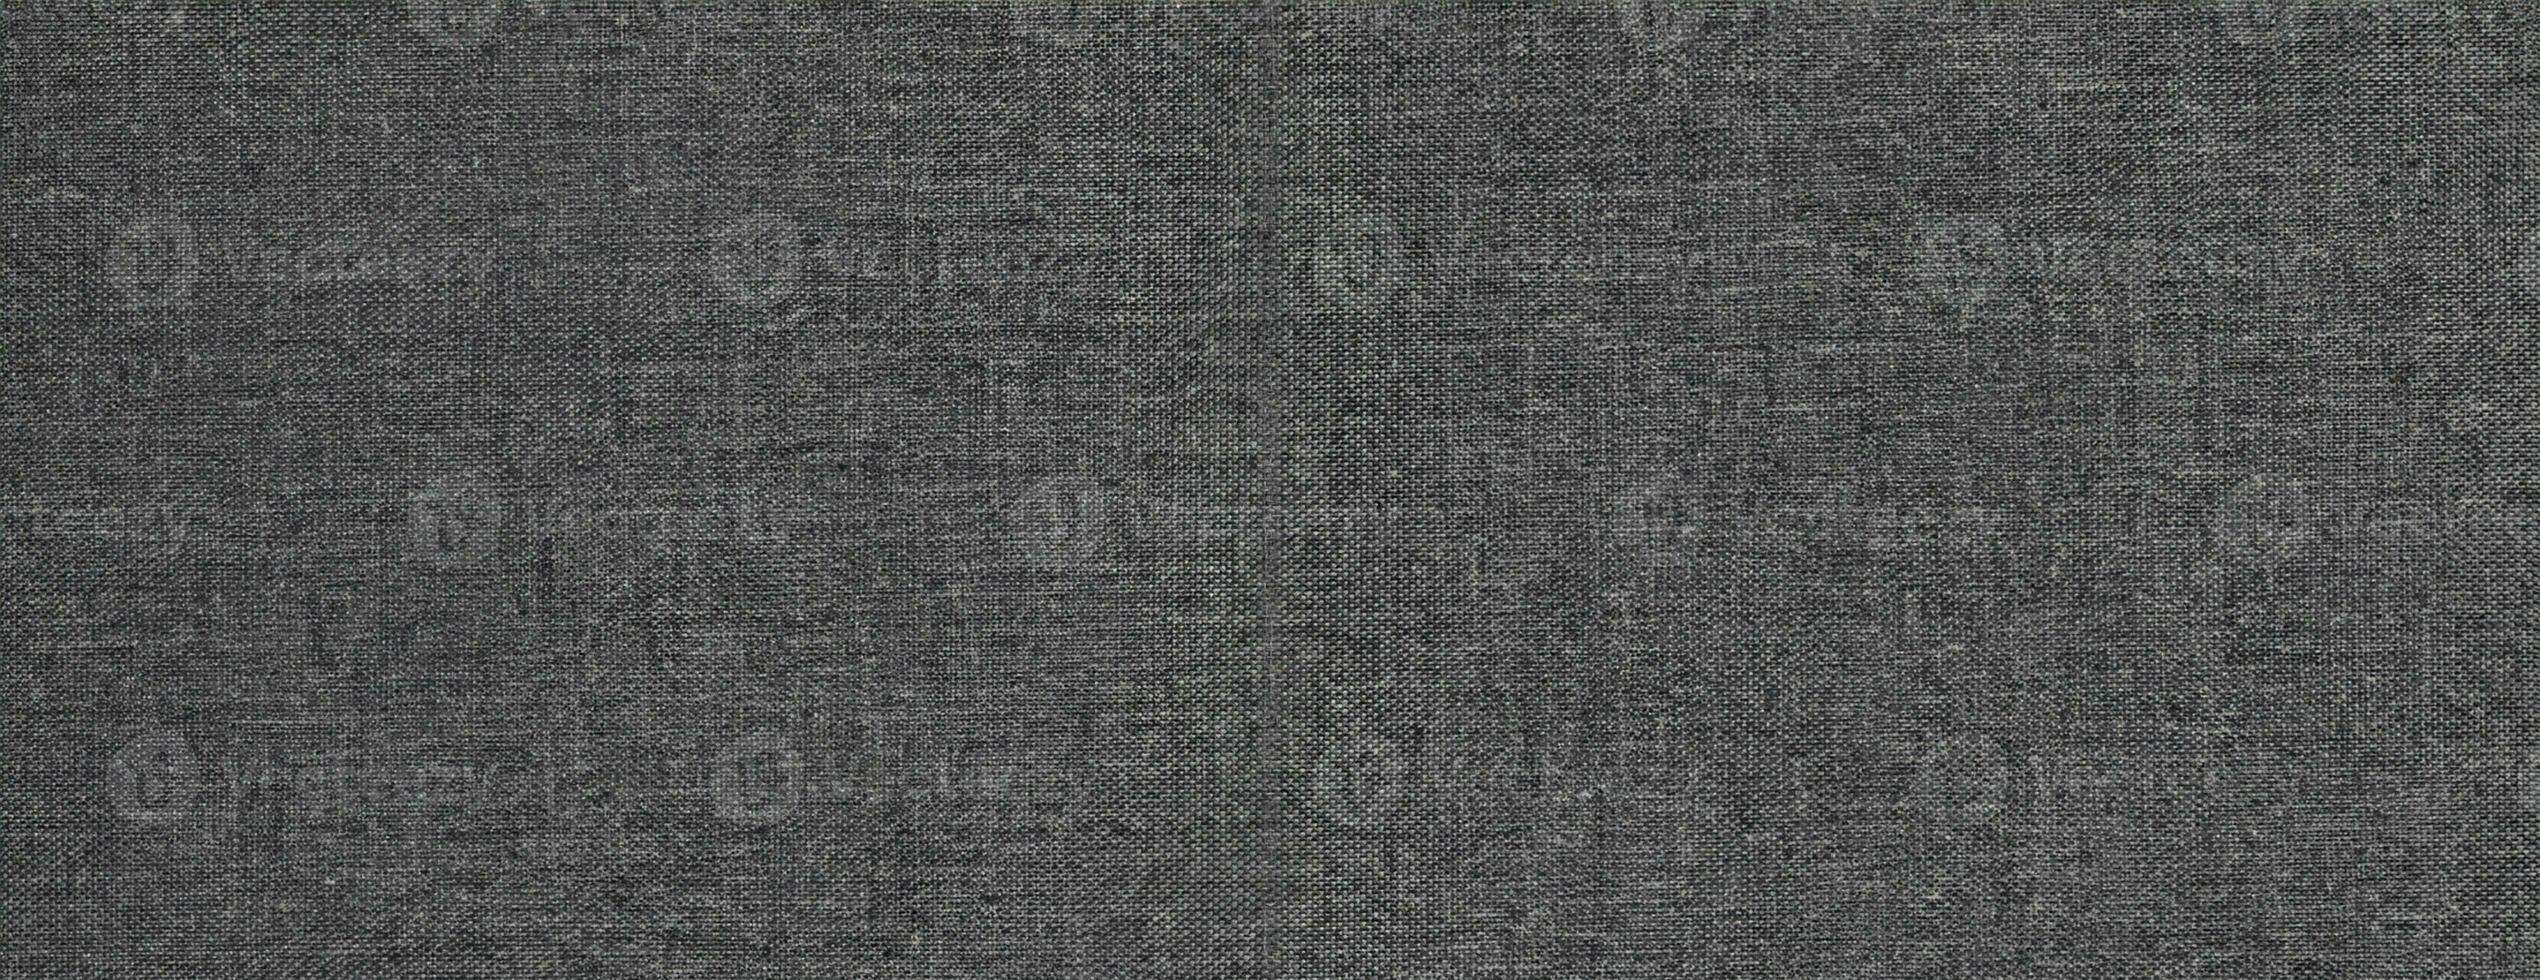 resumen gris negro mezclilla antecedentes foto